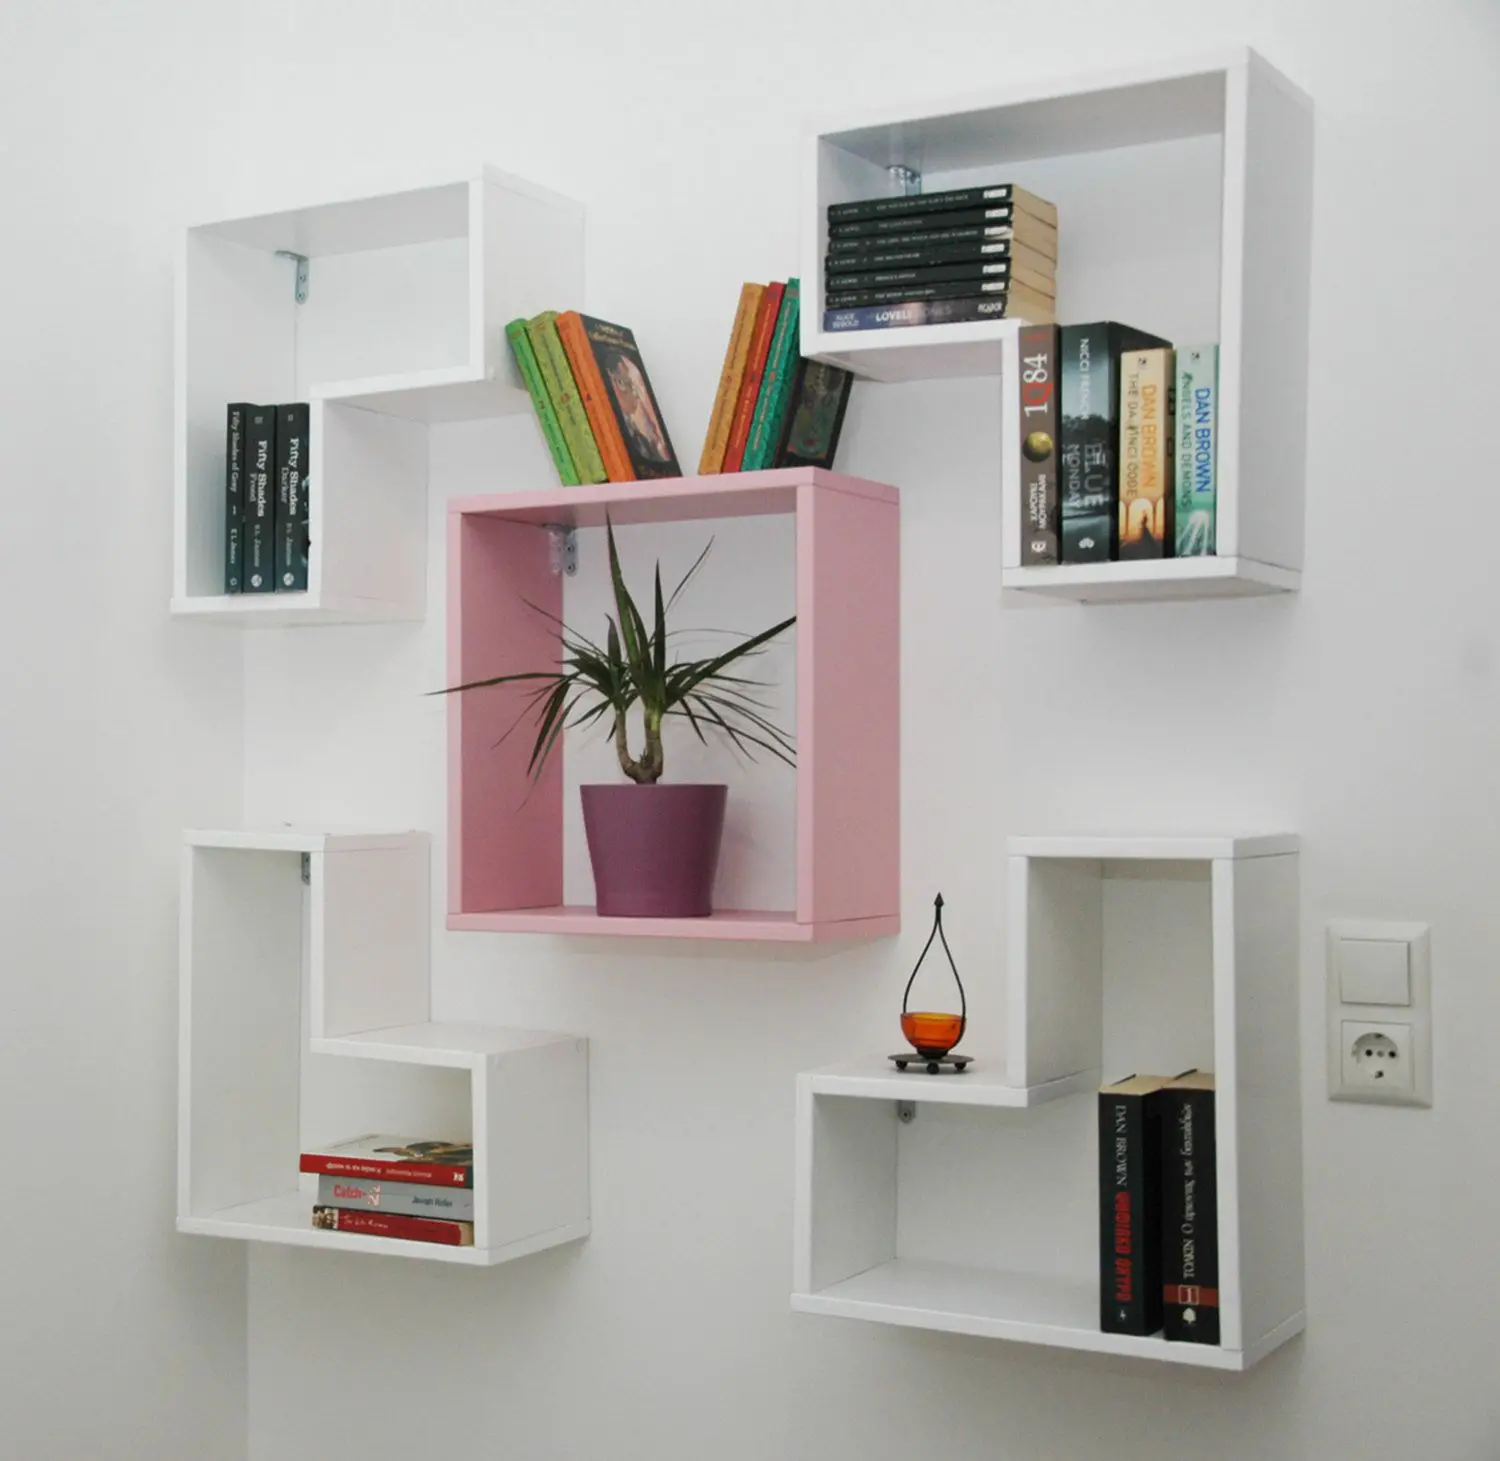 10 Simple Bookshelf Design Ideas That are Popular Today - Talkdecor